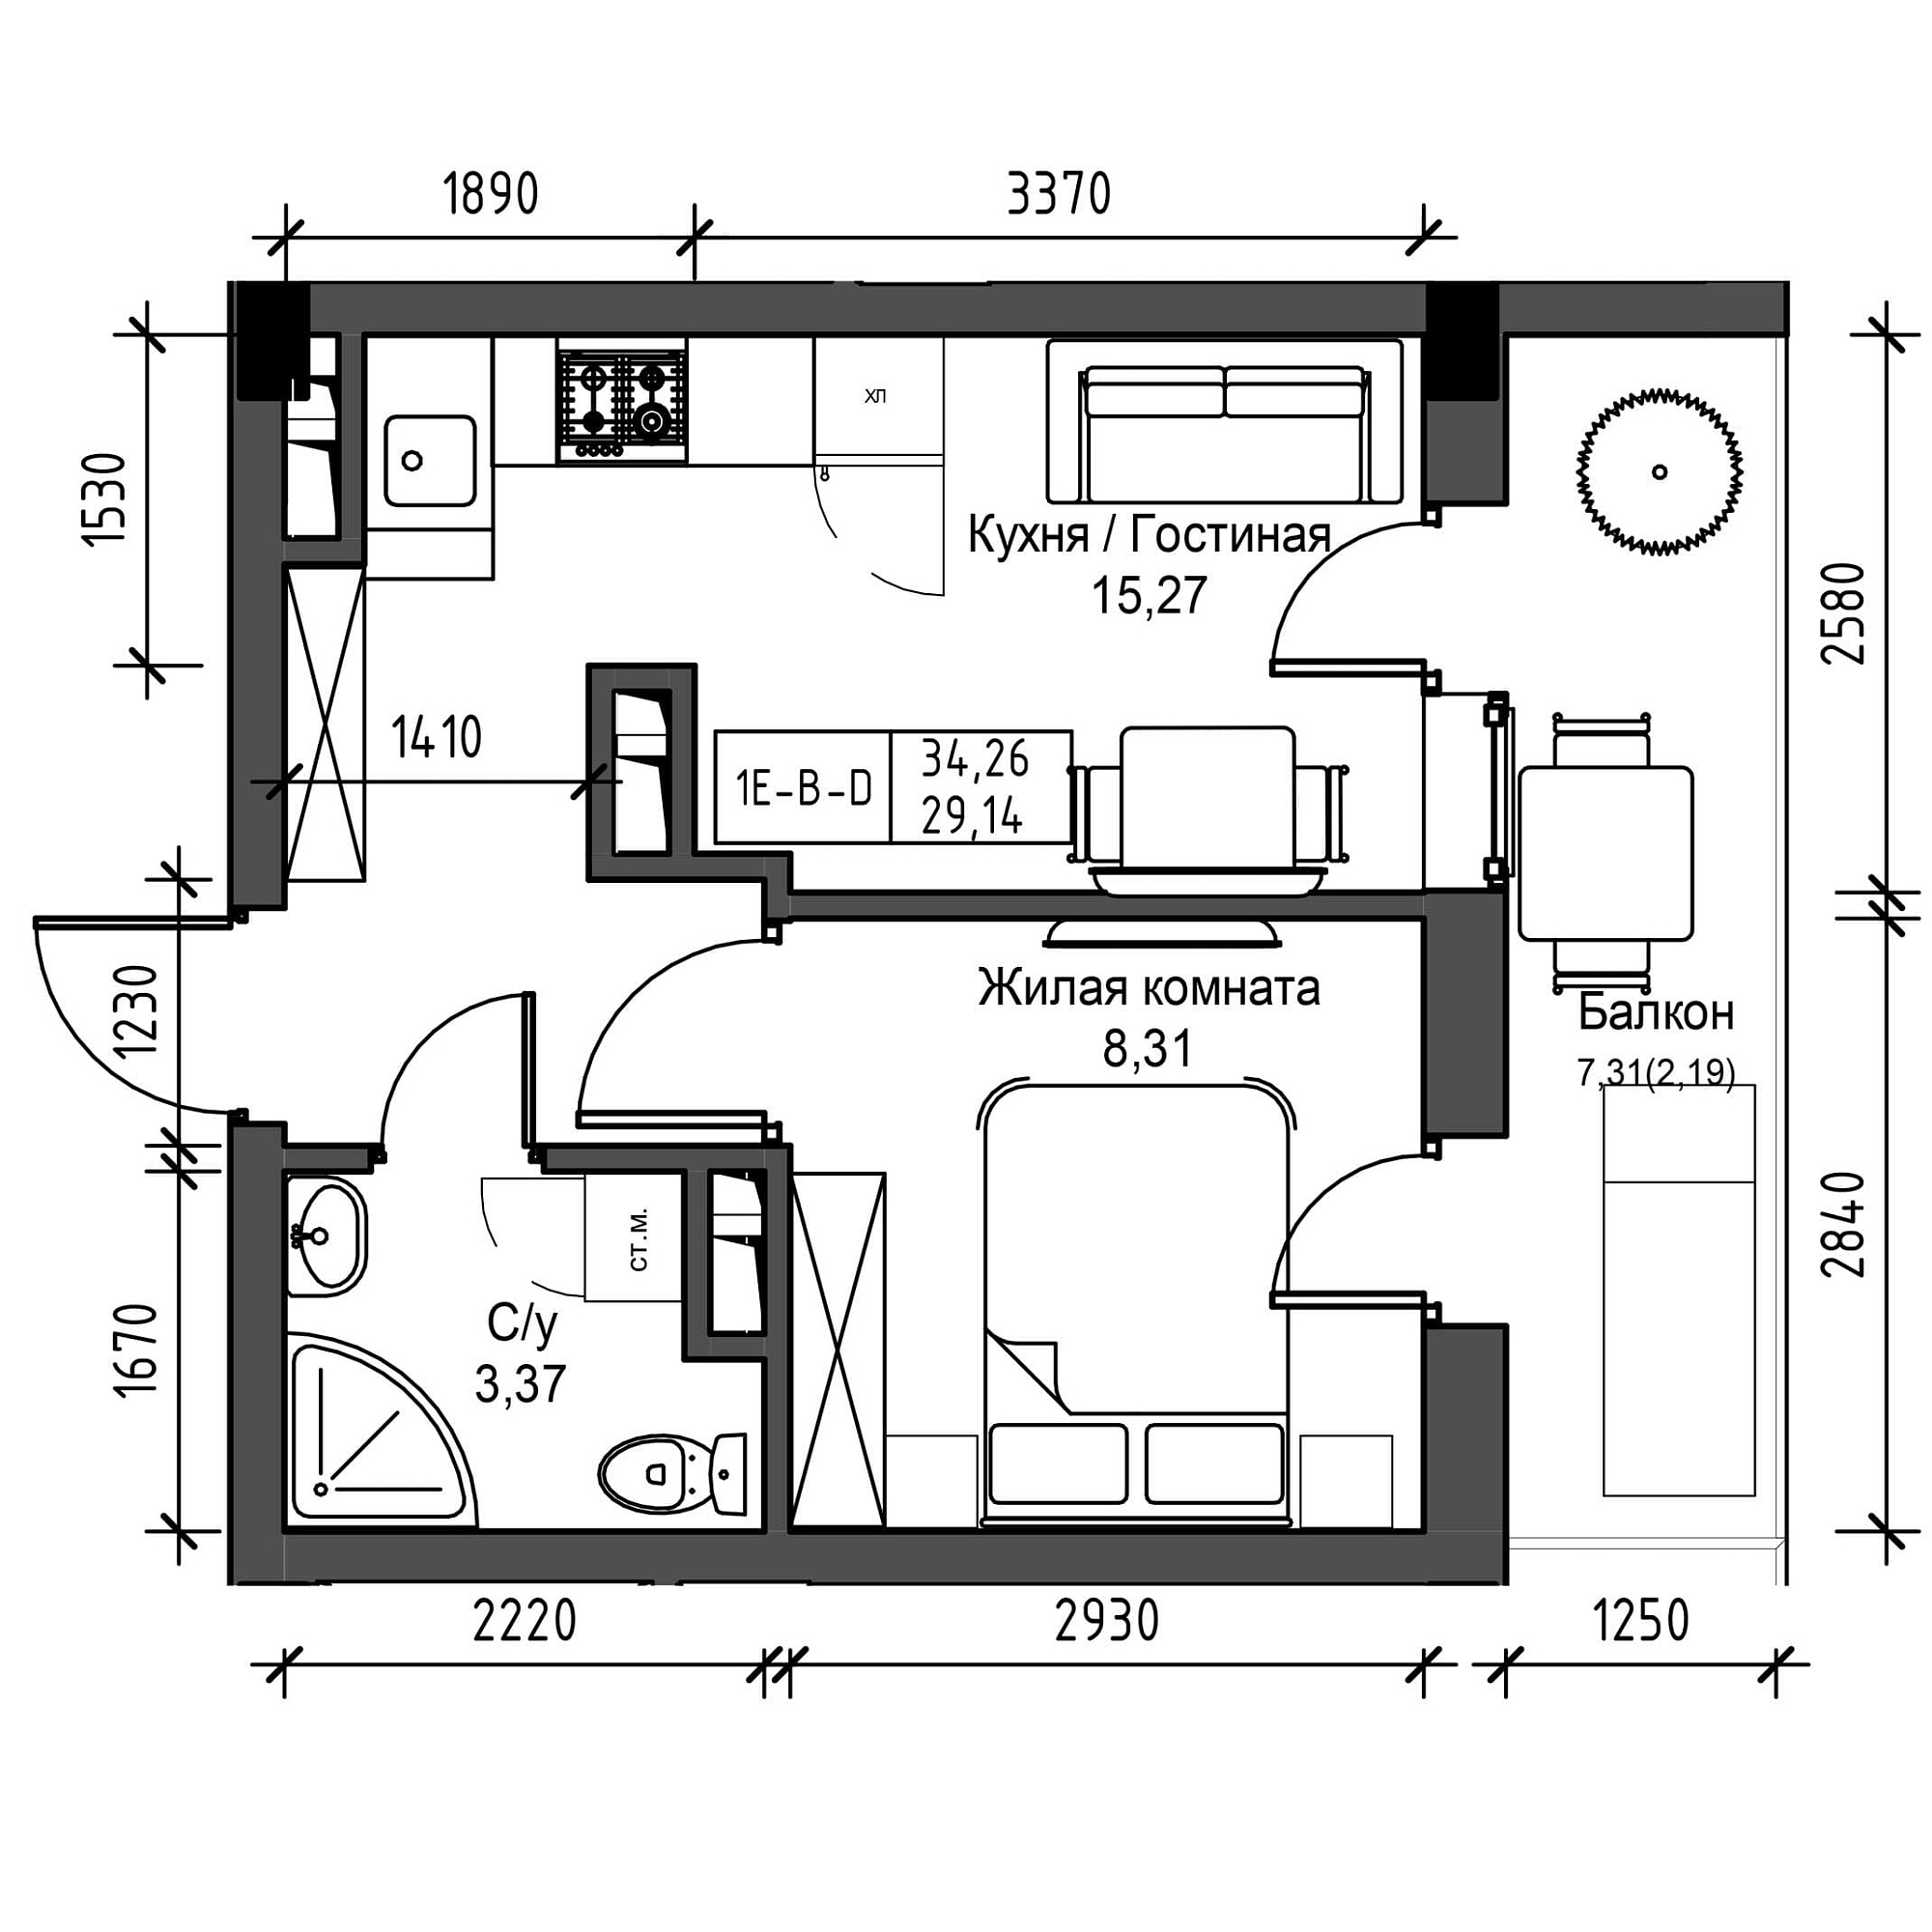 Planning 1-rm flats area 29.14m2, UM-001-07/0023.